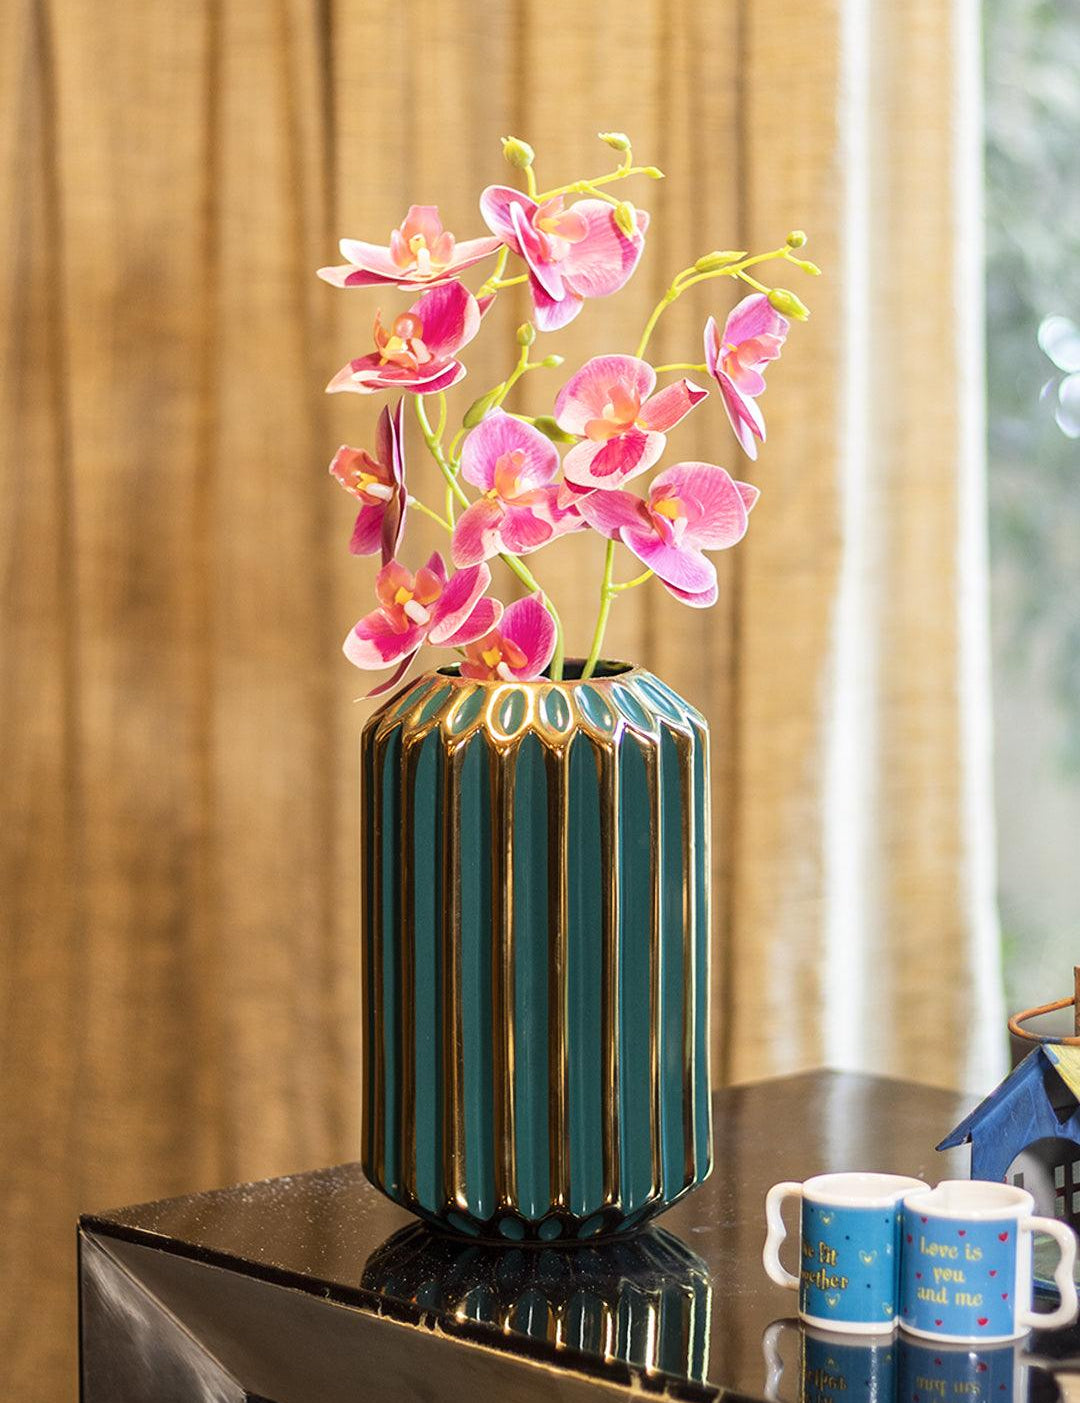 Decorative Ceramic Flower Vase - Golden & Green Cyclinderical, Glossy